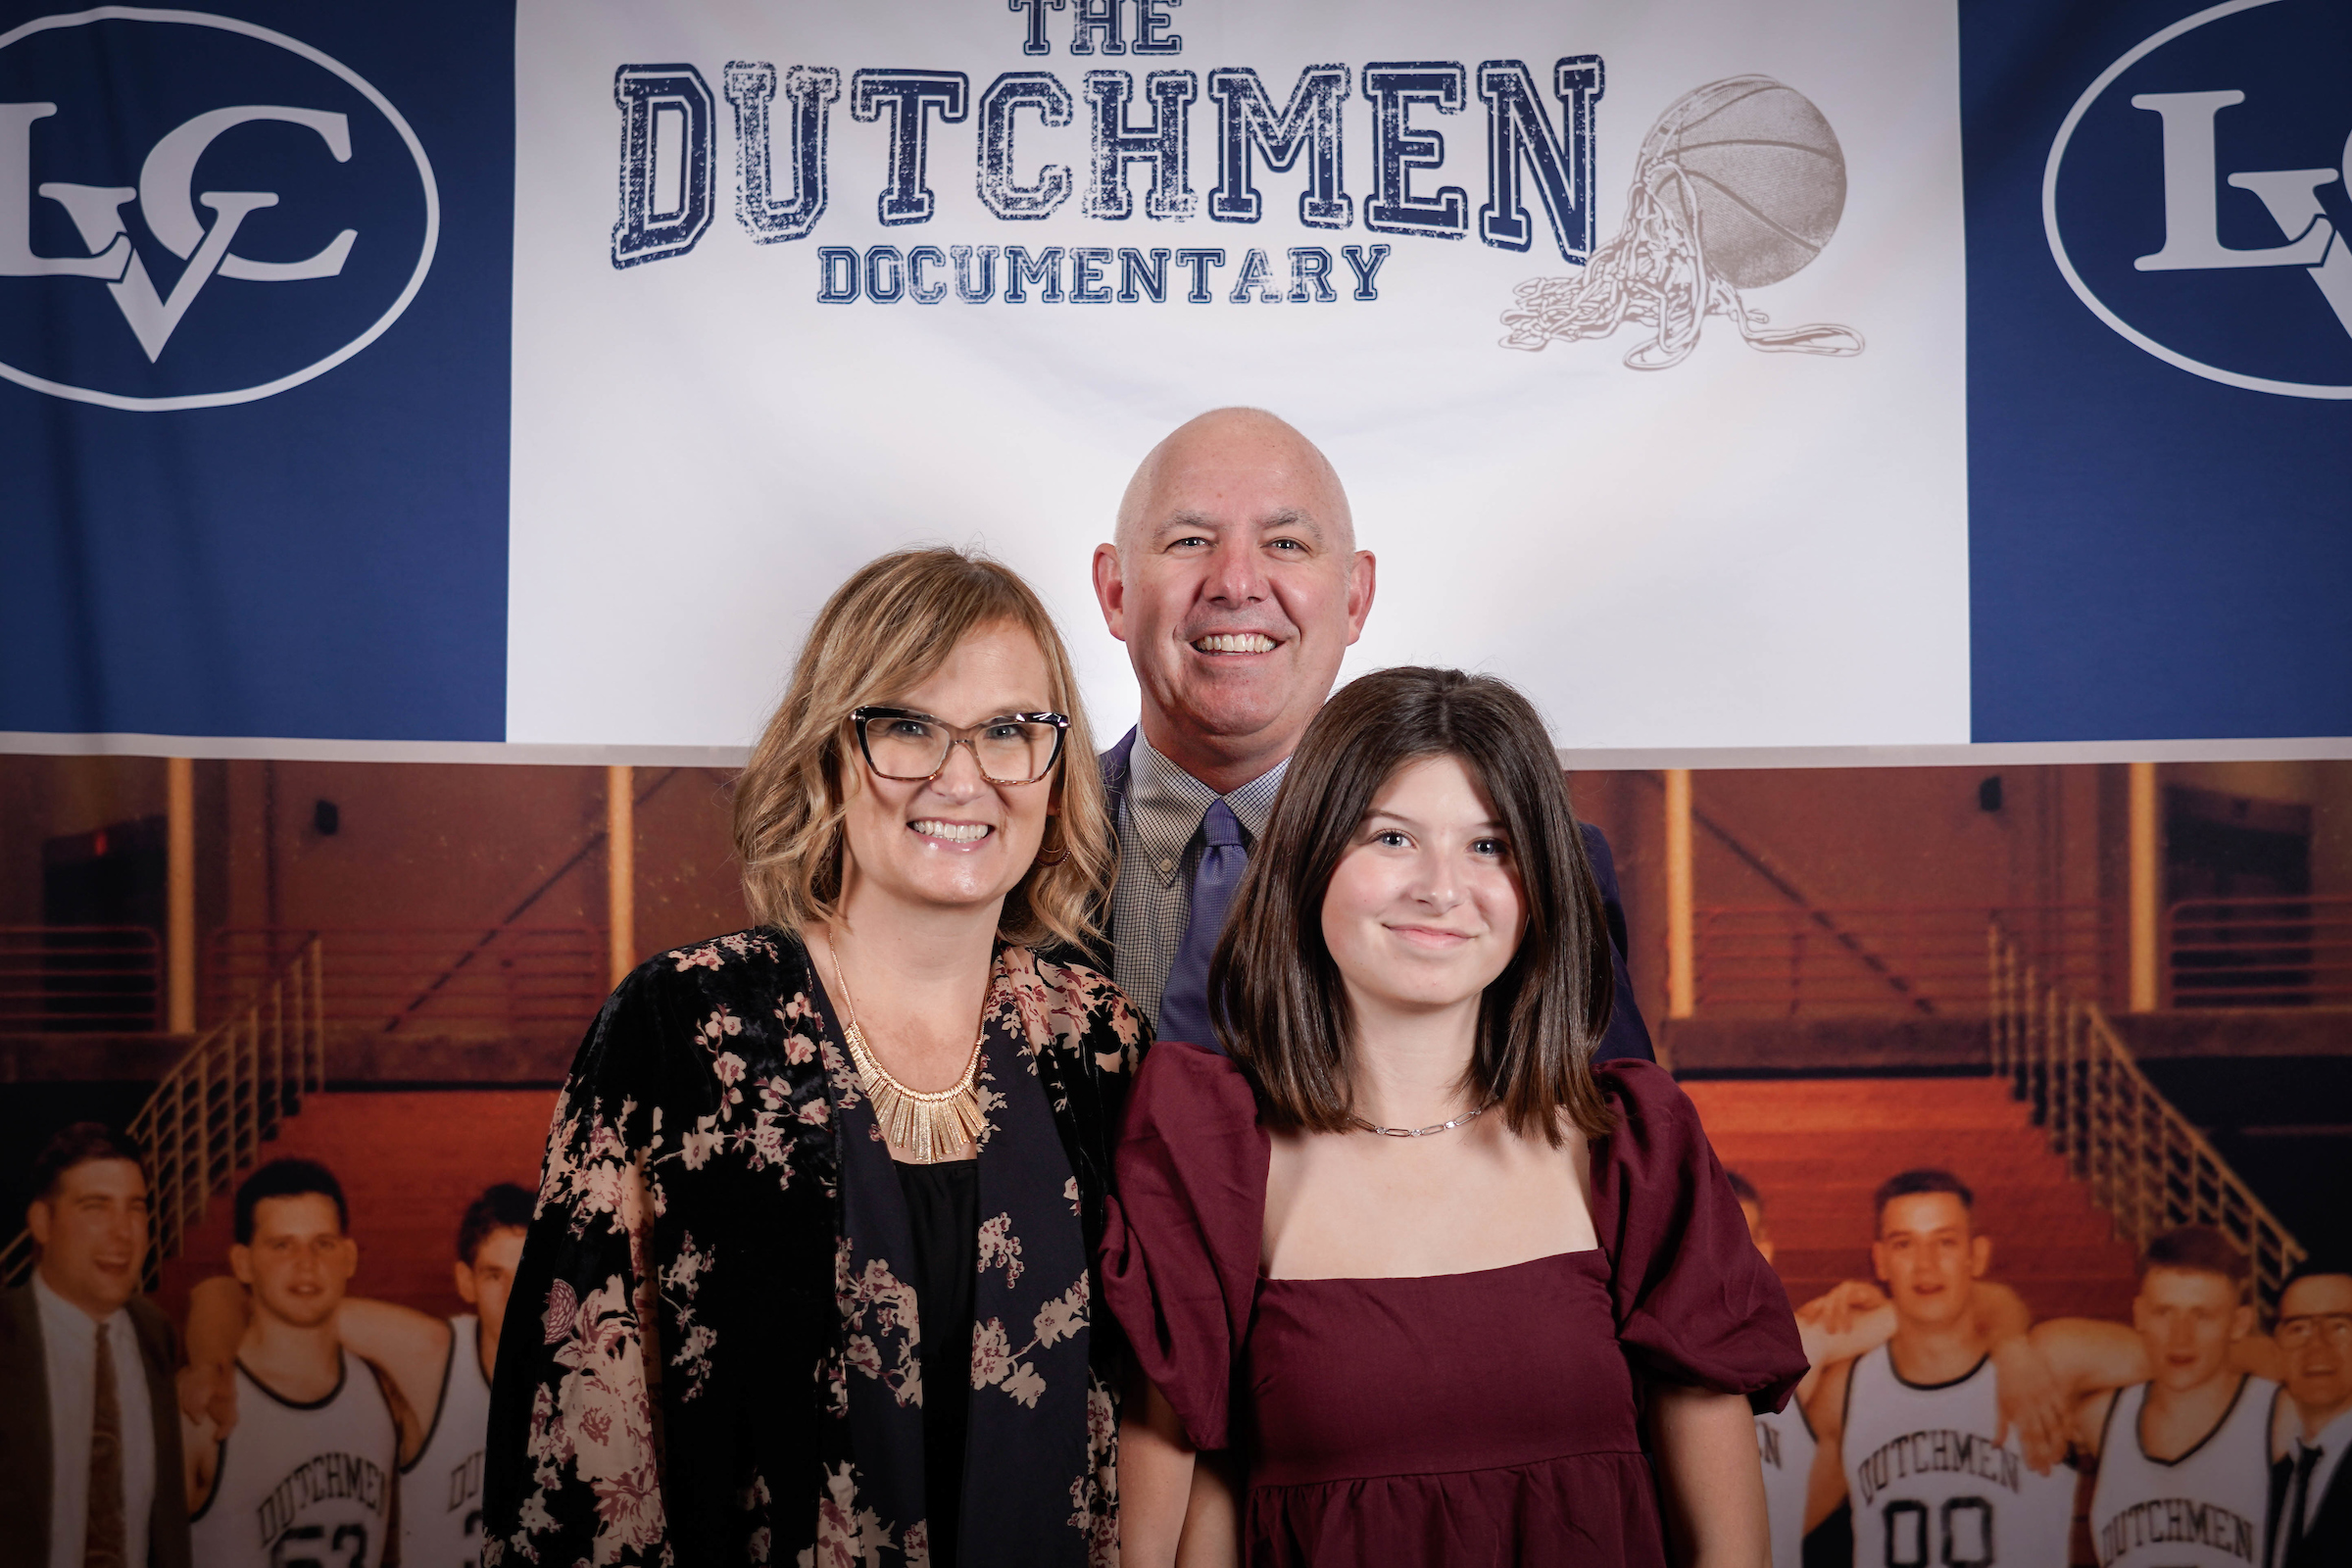 The Dutchmen documentary premier event